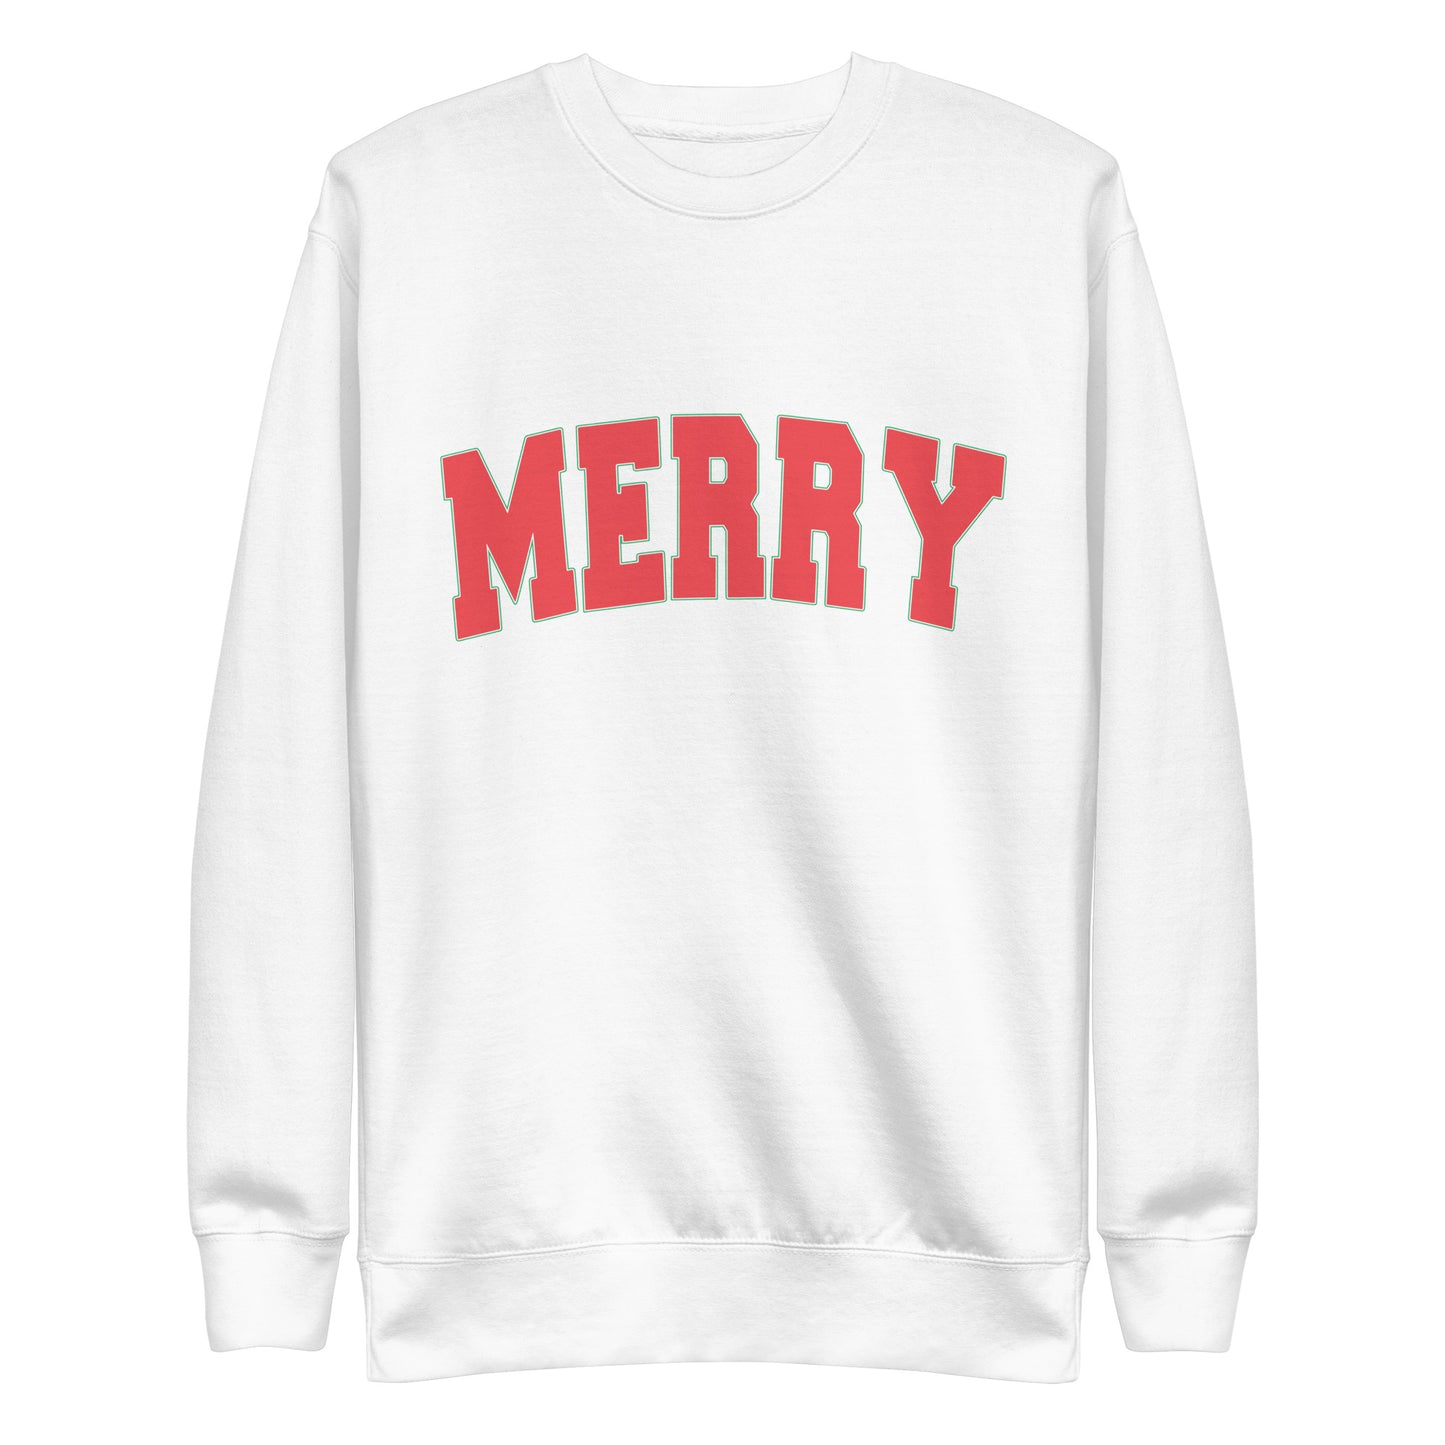 "Merry" Unisex Premium Sweatshirt